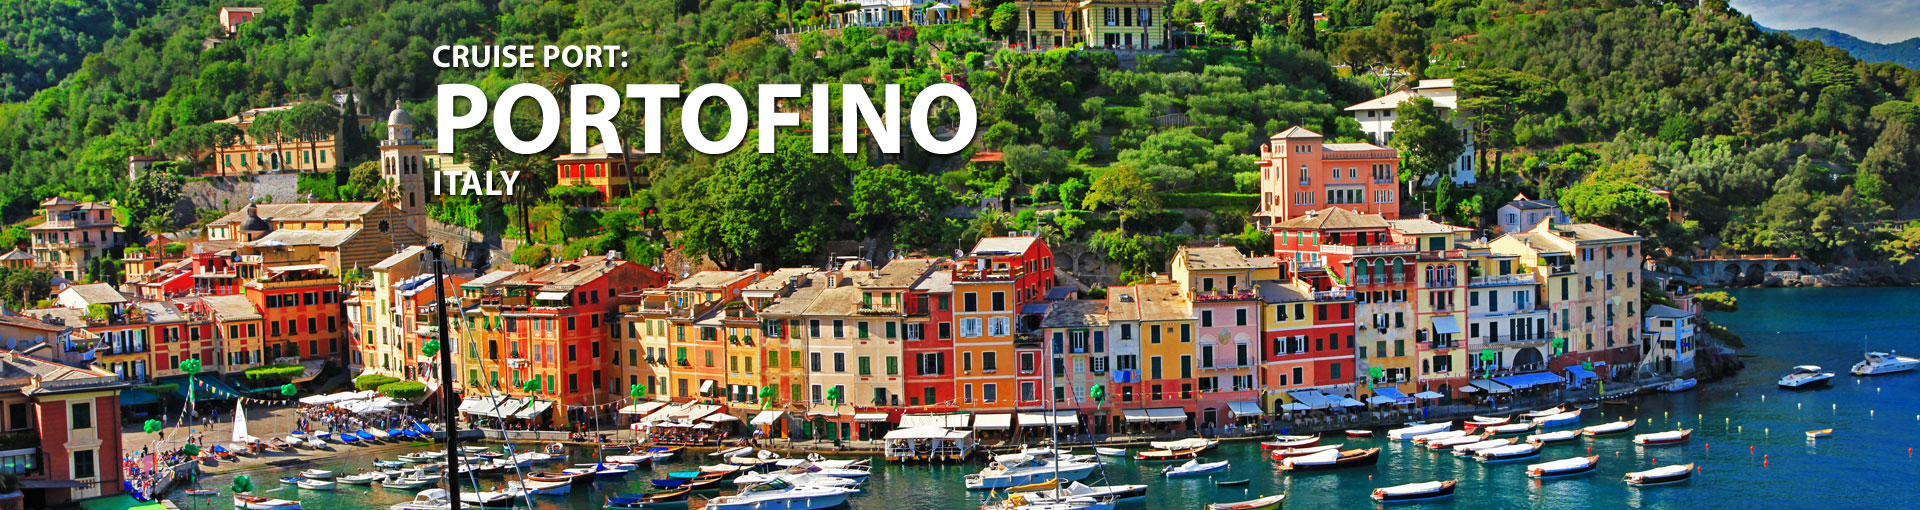 Portofino Pics, Man Made Collection